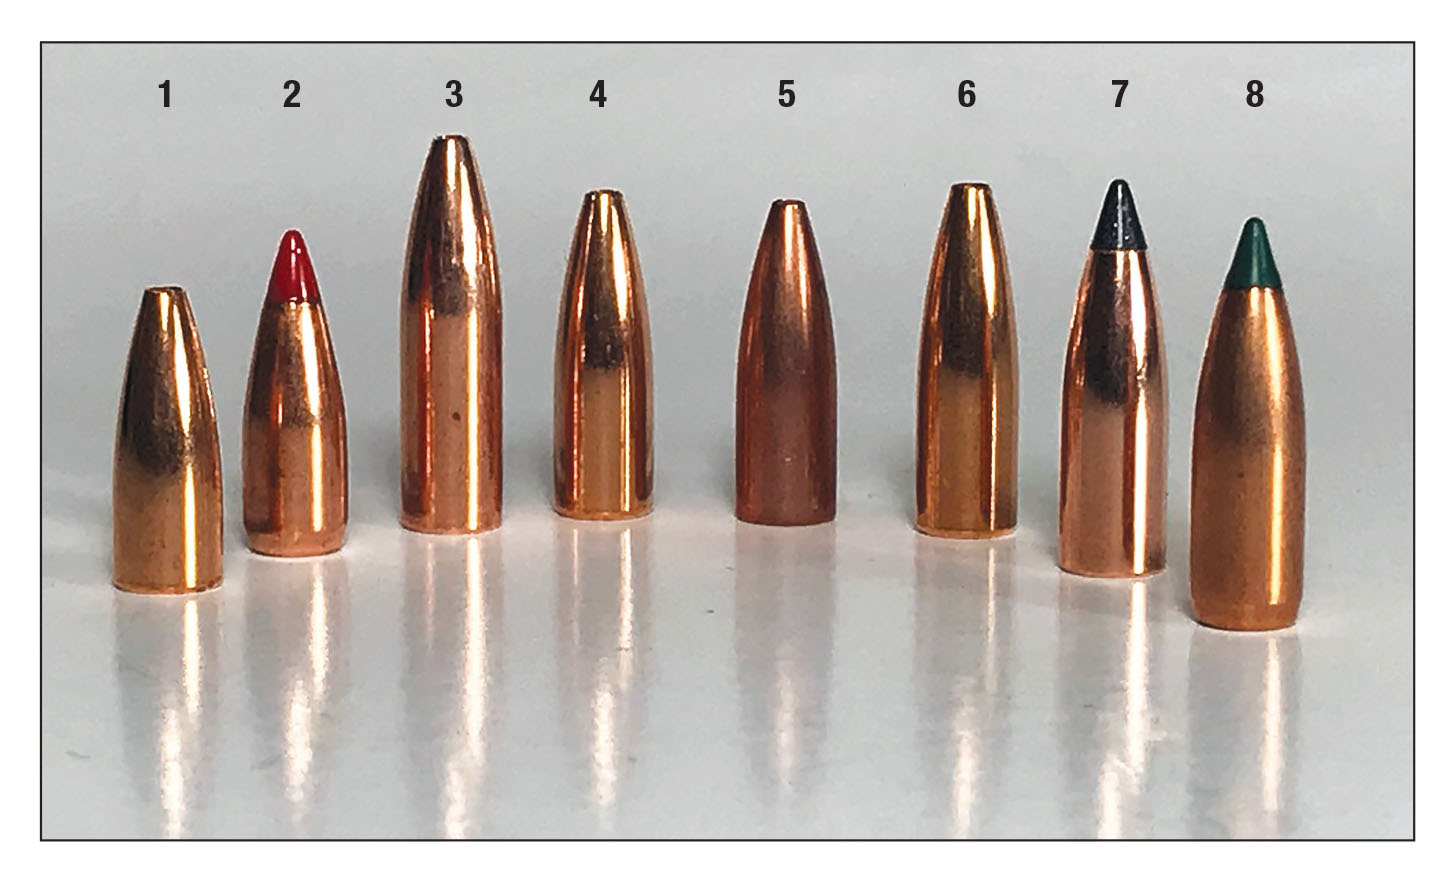 Suitable bullets include the (1) Berger 40-grain Flat Base Varmint, (2) Hornady 40 V-MAX, (3) Barnes 50 Varmint Grenade, (4) Berger 50 Flat Base Varmint, (5) Sierra 53 MatchKing, (6) Berger 55 Varmint, (7) Nosler 55 Tipped Varmageddon and the (8) Sierra 55-grain BlitzKing.